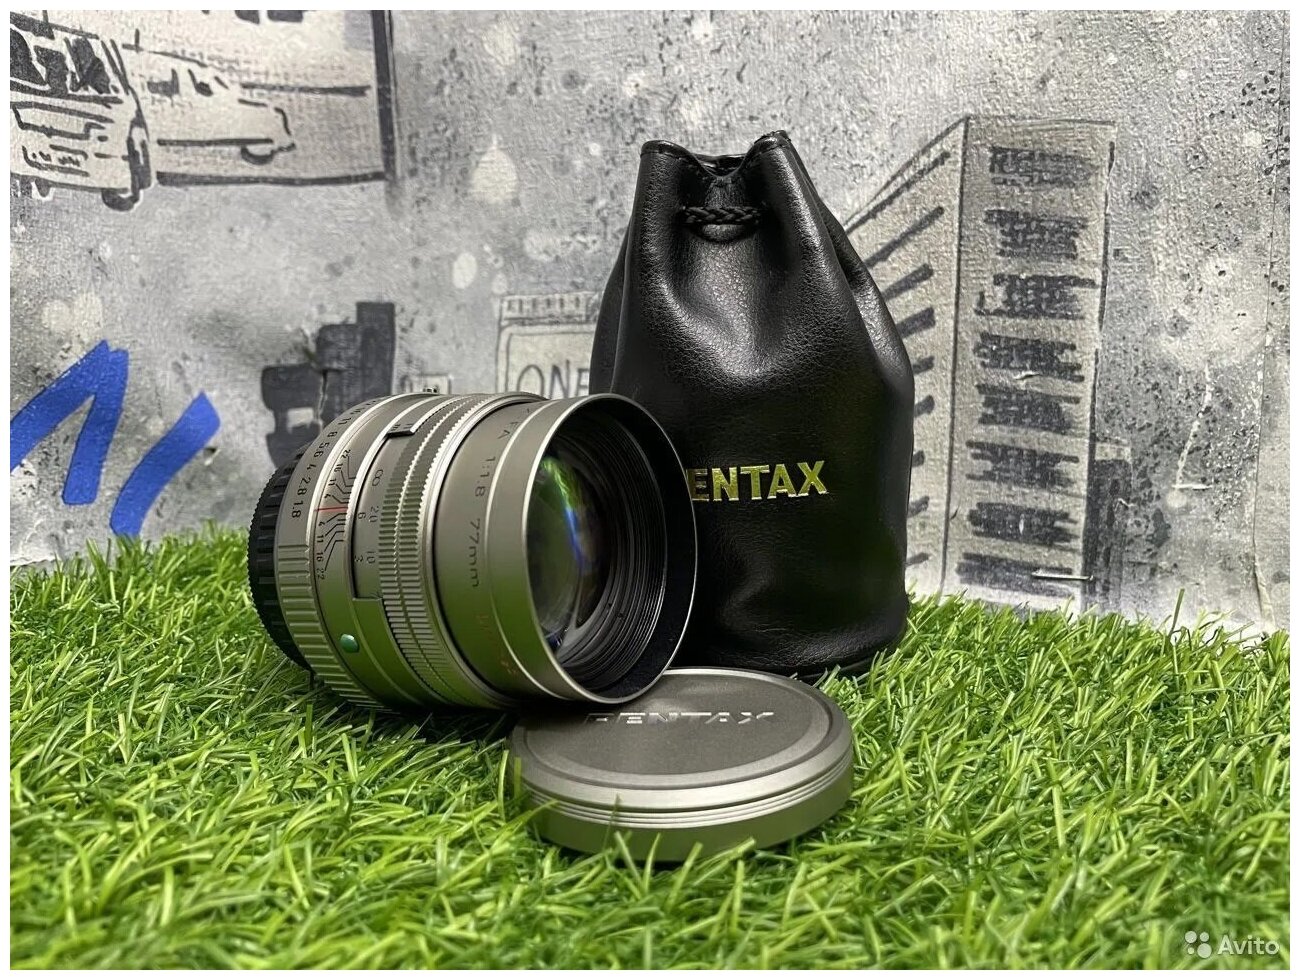 Pentax 77mm 1.8 Limited Pentax K